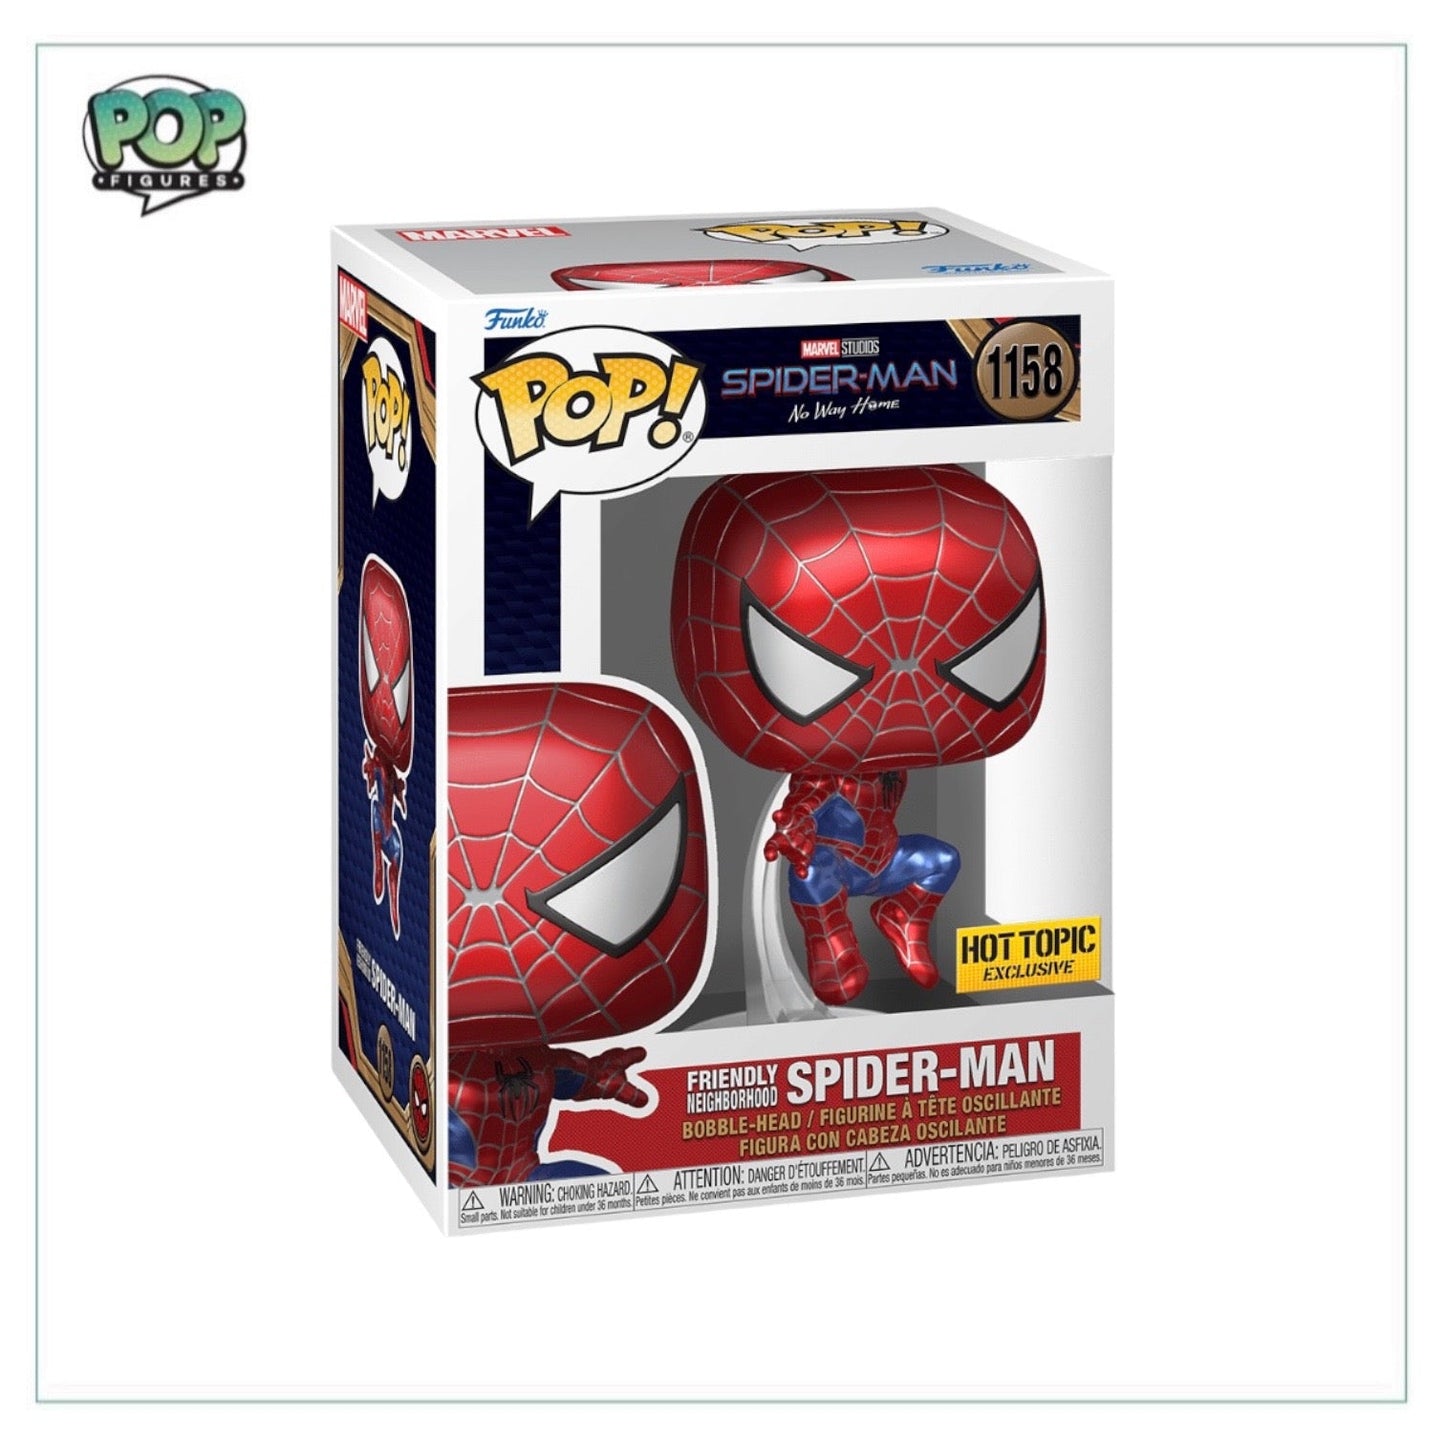 Friendly Neighborhood Spider-Man #1158 (Metallic) Funko Pop! - Spider-Man No Way Home - Hot Topic Exclusive - Angry Cat